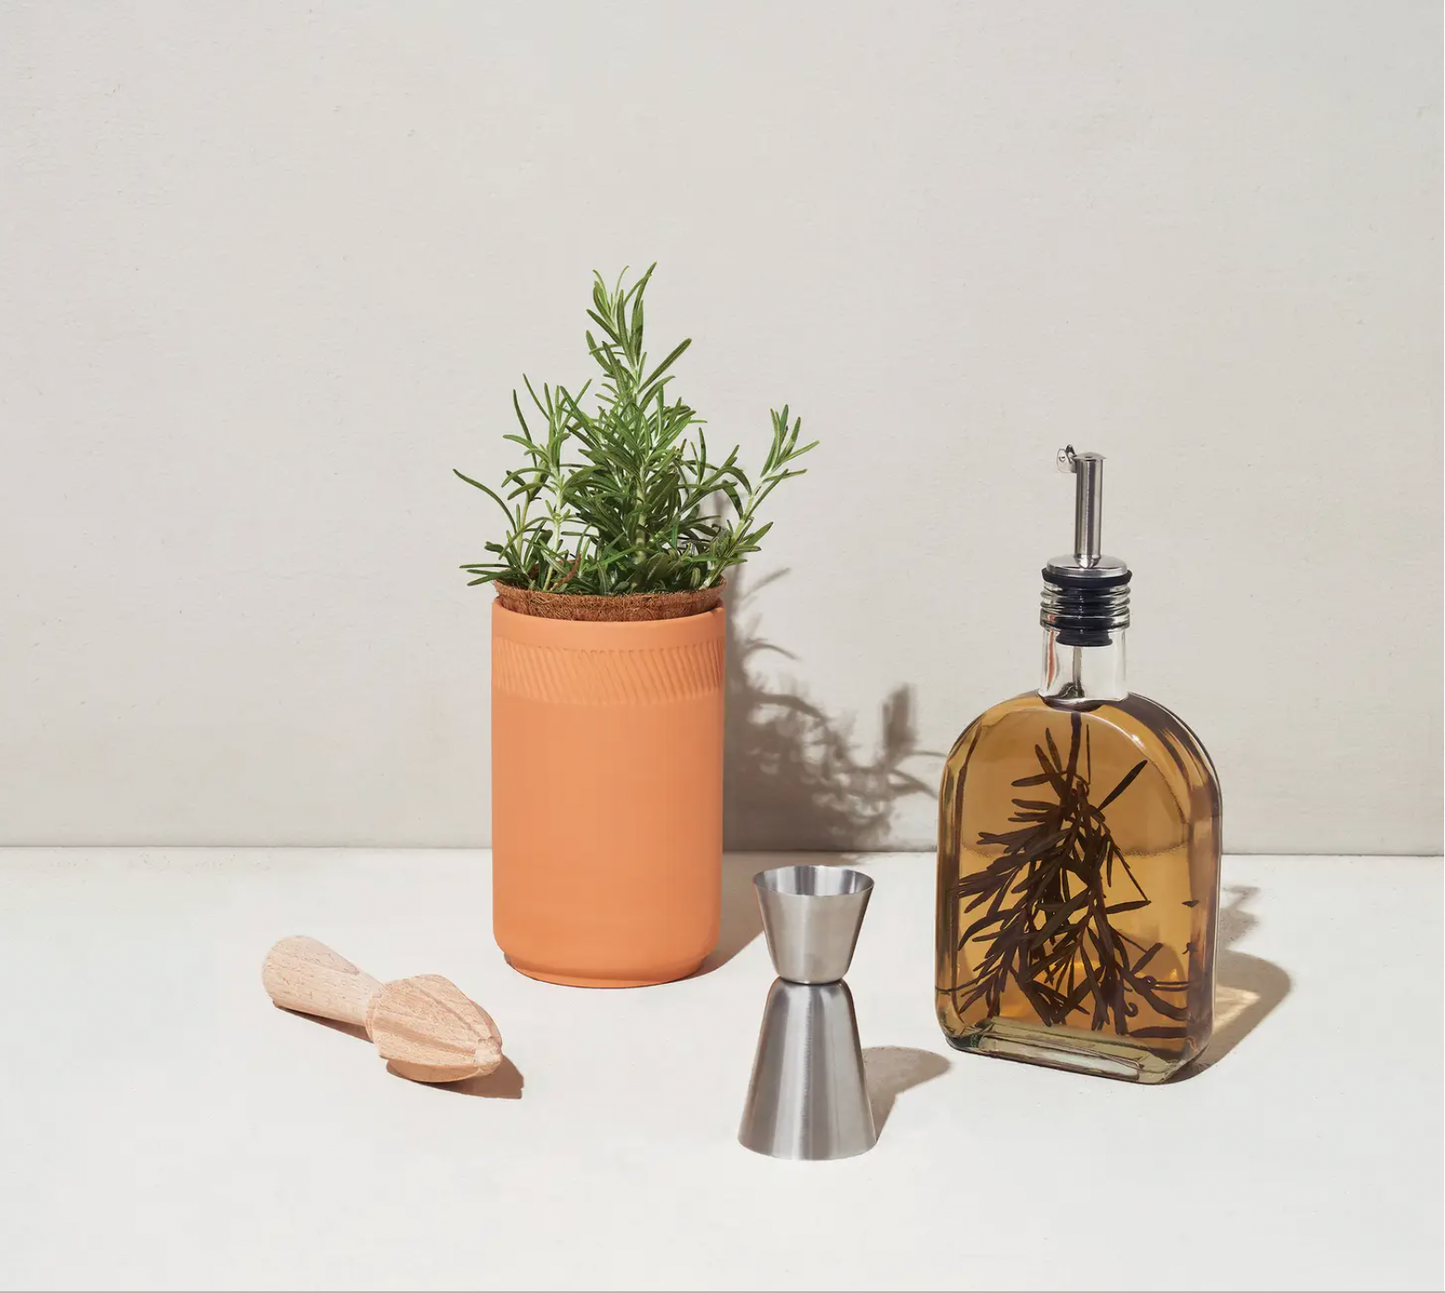 Botanical mixology gift set for cocktails